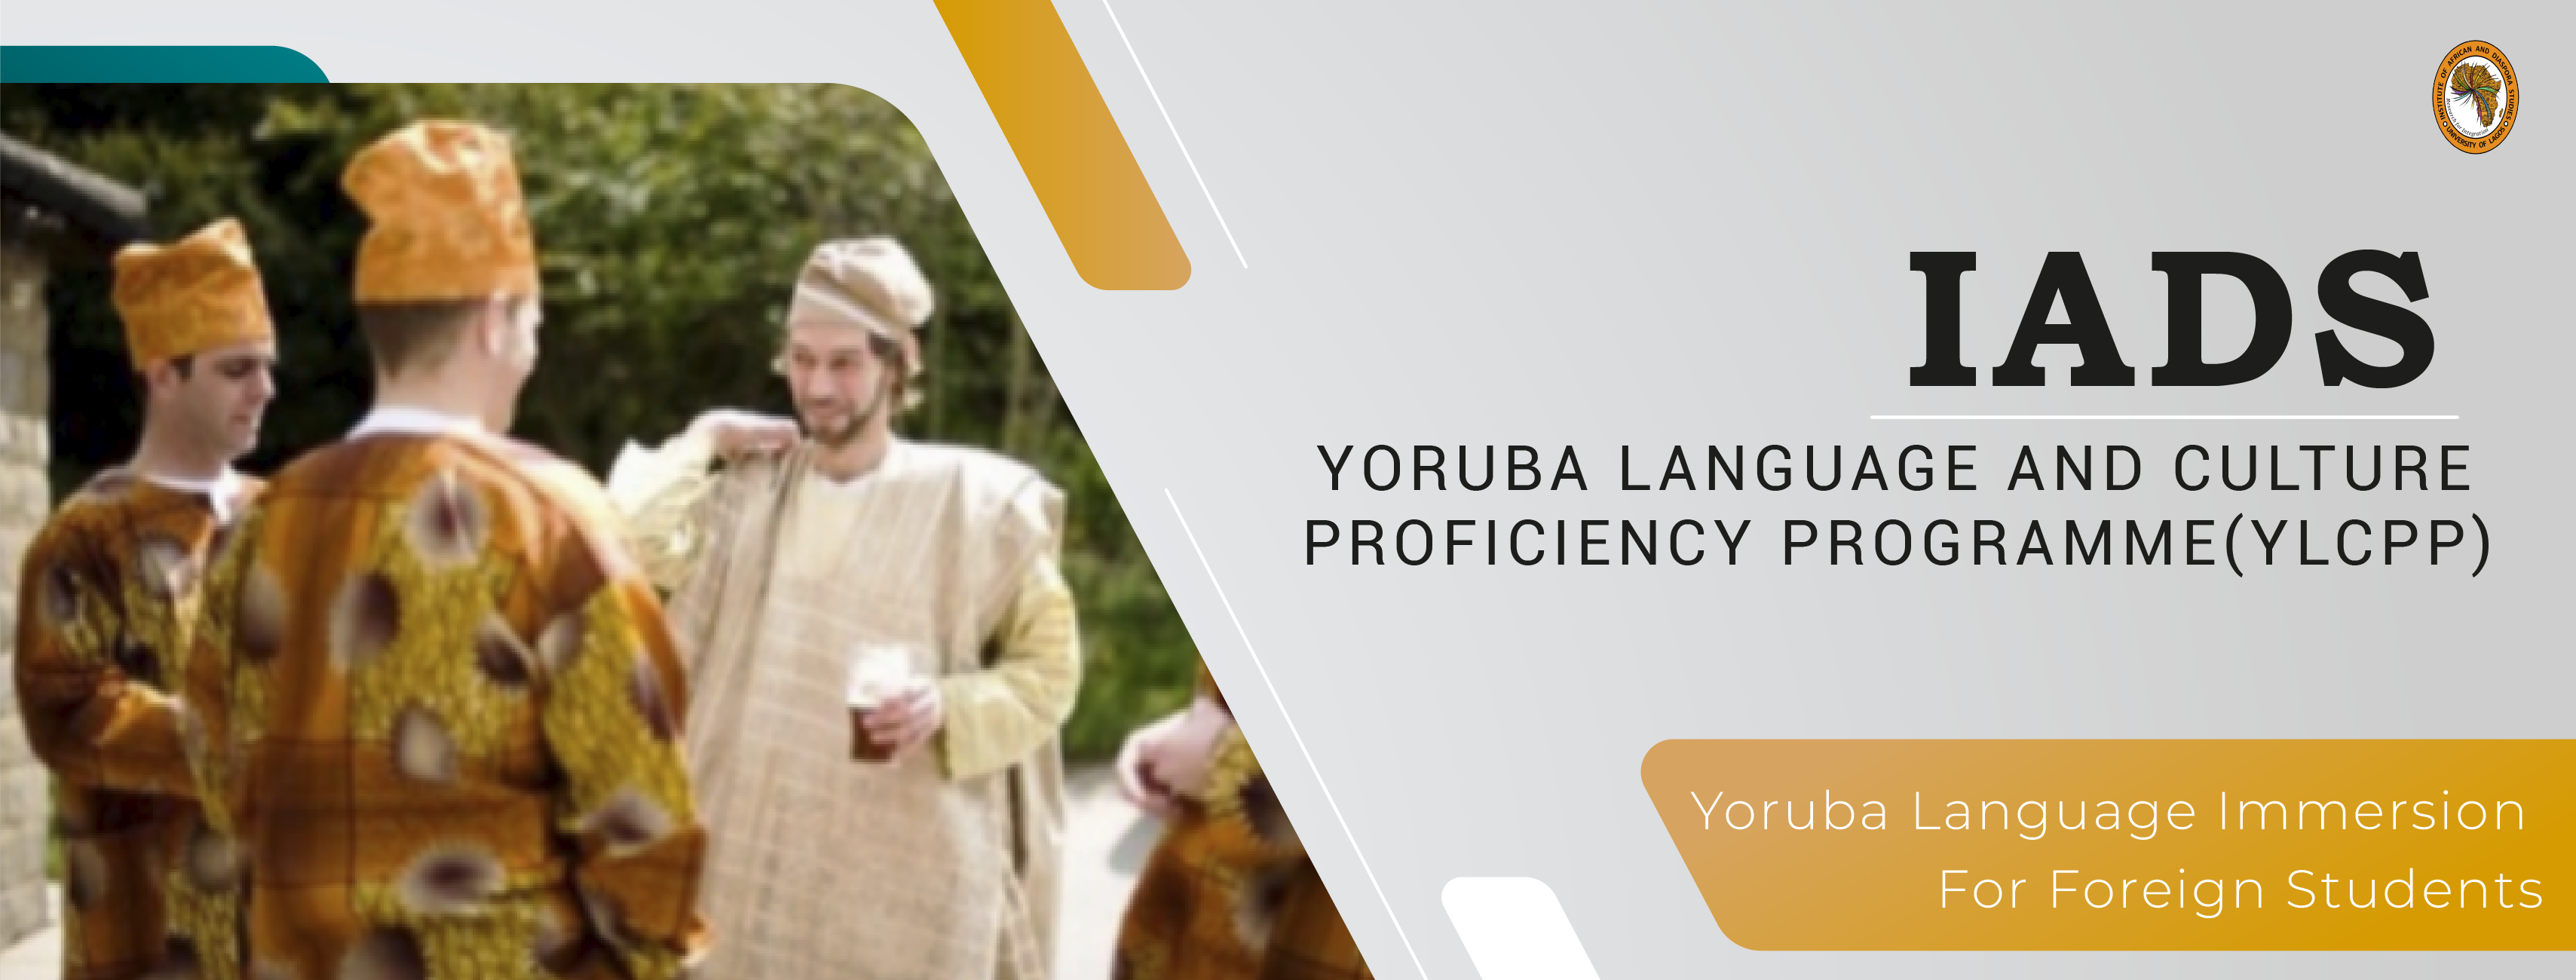 IADS Yoruba language immersion